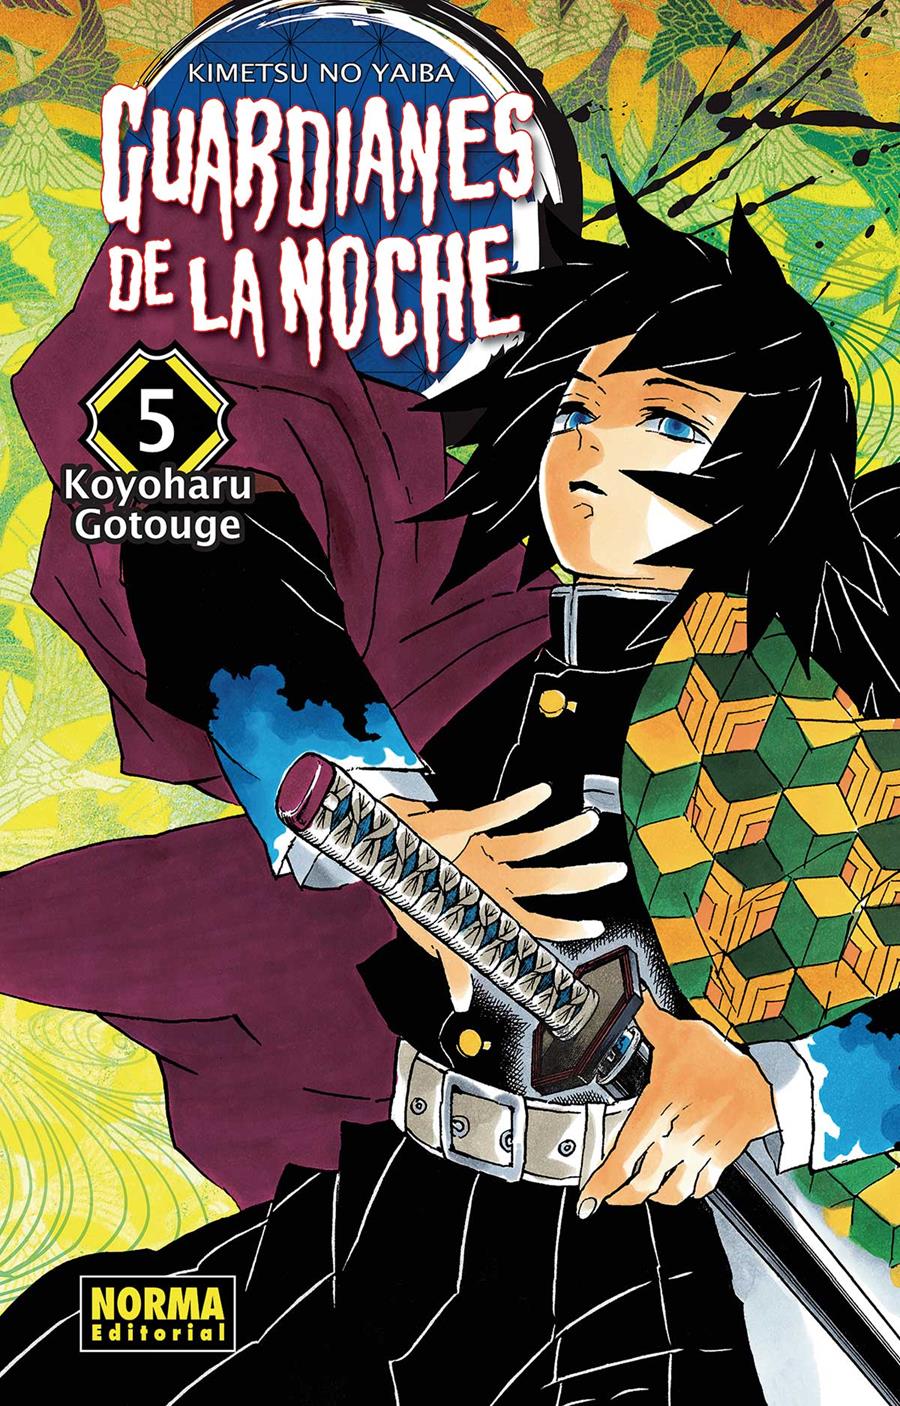 Guardianes de la noche 05 | N0819-NOR25 | Koyoharu Gotouge | Terra de Còmic - Tu tienda de cómics online especializada en cómics, manga y merchandising